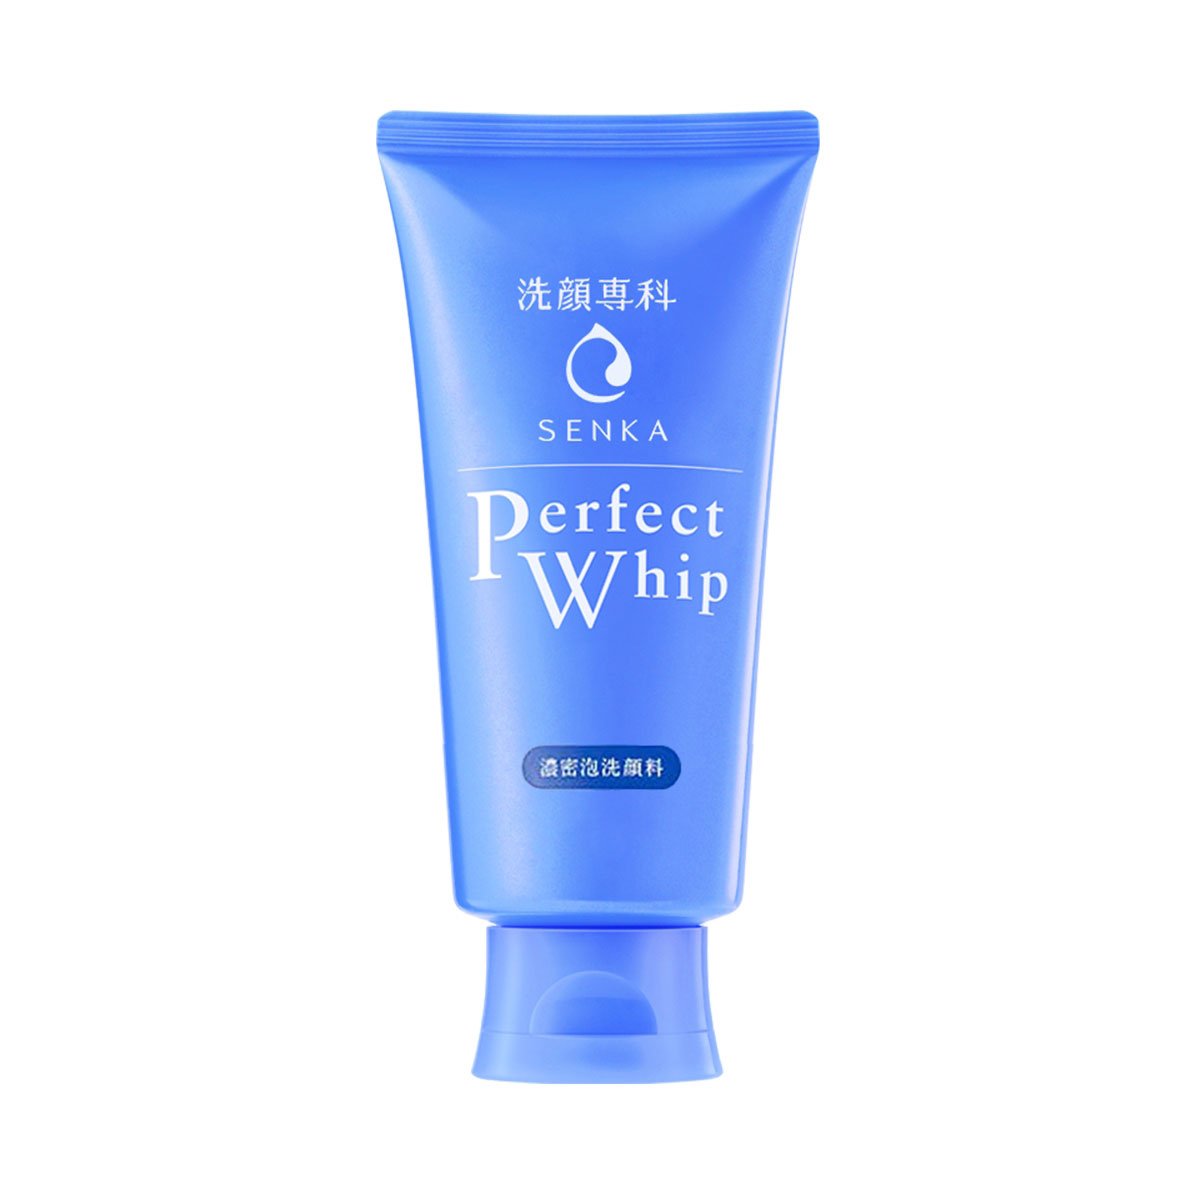 SHISEIDO - Senka Perfect Whip Original Facial Foam